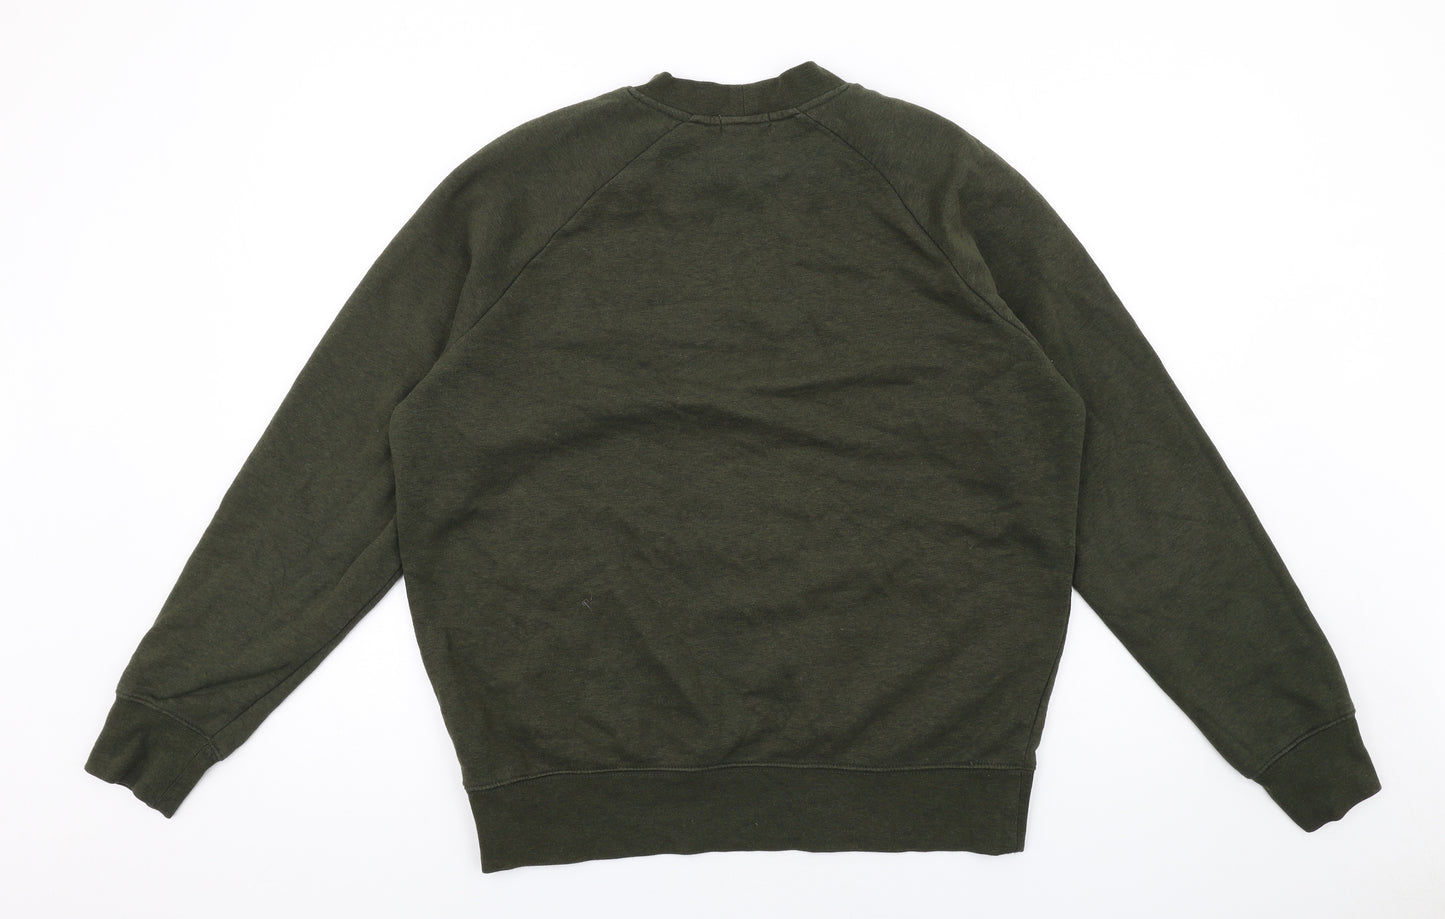 Topman Mens Green Cotton Pullover Sweatshirt Size M